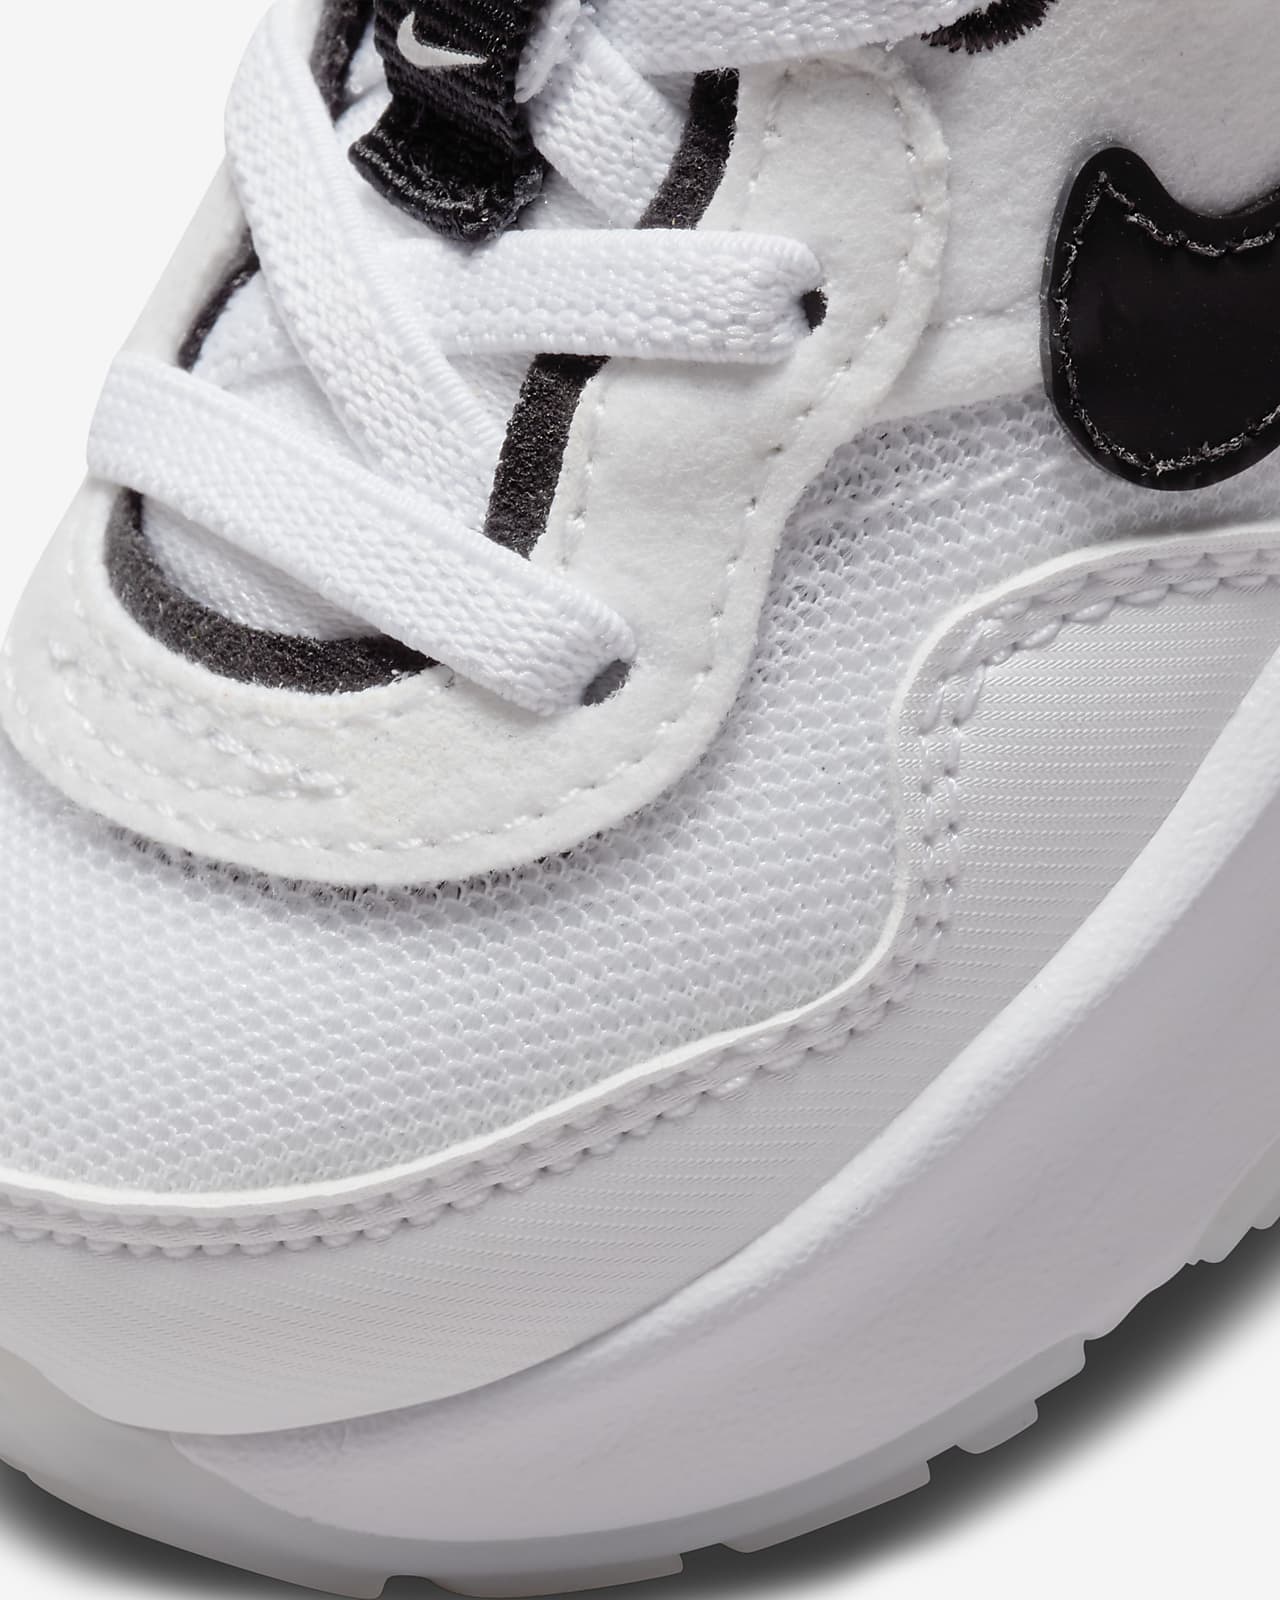 Motif Baby/Toddler Max Nike Shoes. Air